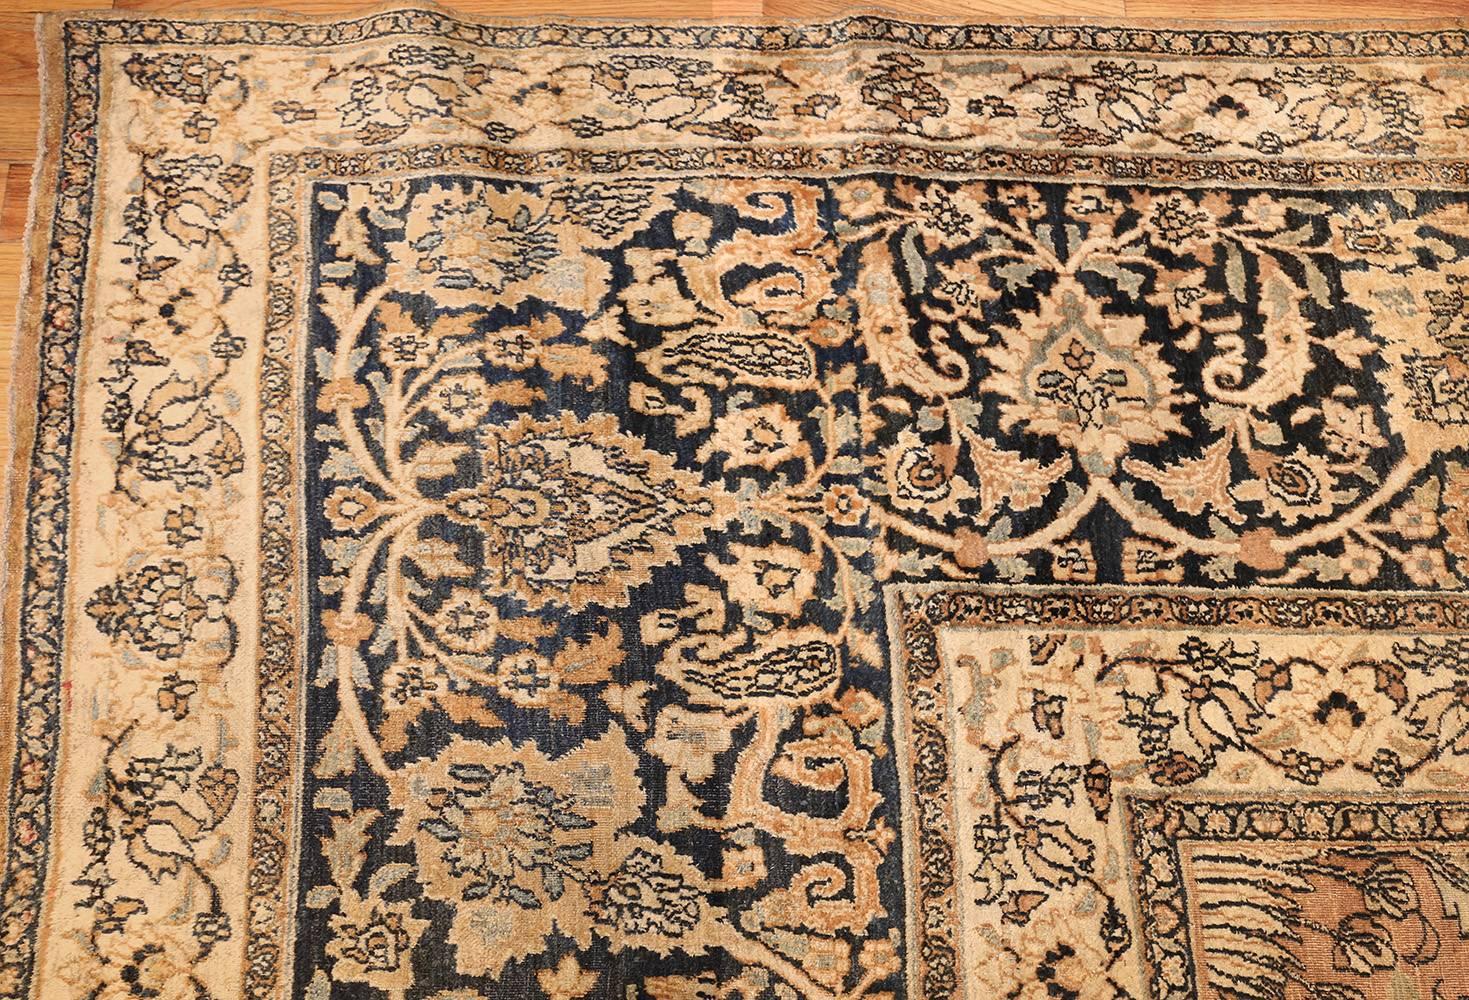 Beautiful Large Decorative Antique Persian Khorassan Carpet, Country of Origin: Persia, Circa Date: 1900 - Size: 11 ft 10 in x 18 ft 7 in (3.61 m x 5.66 m).